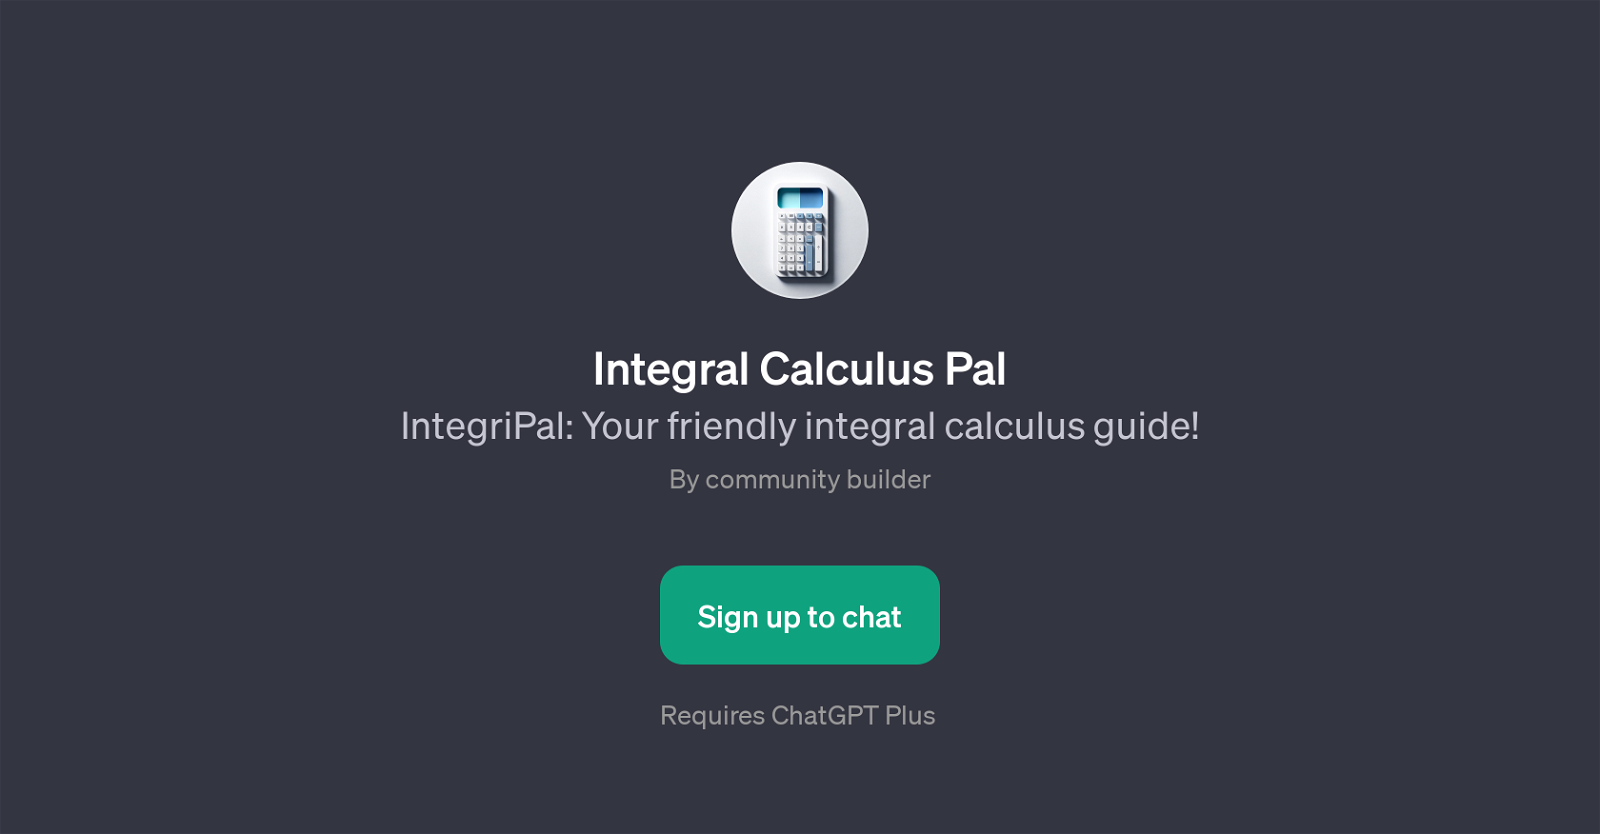 Integral Calculus Pal website